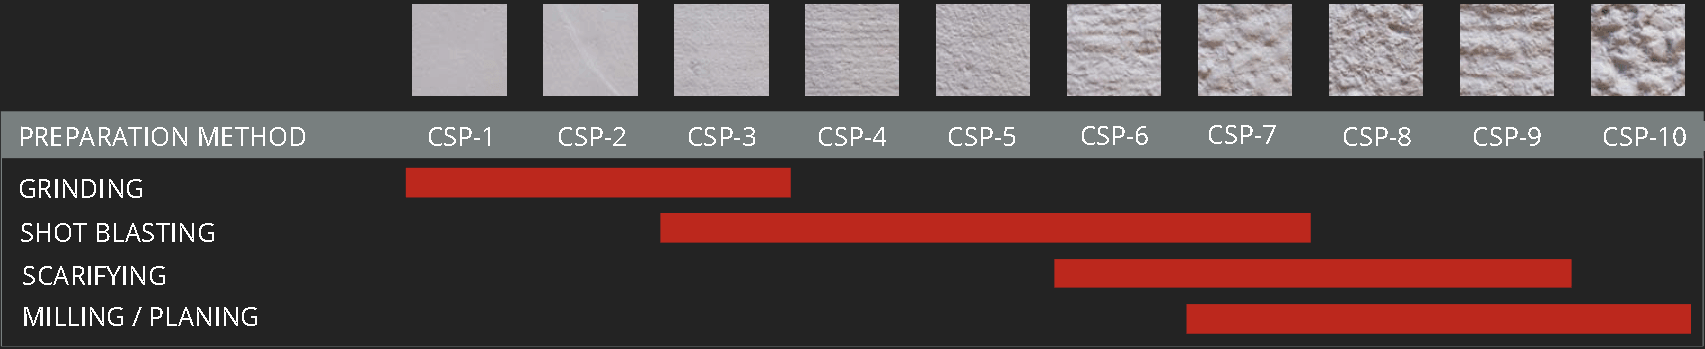 CSP-PROFILES